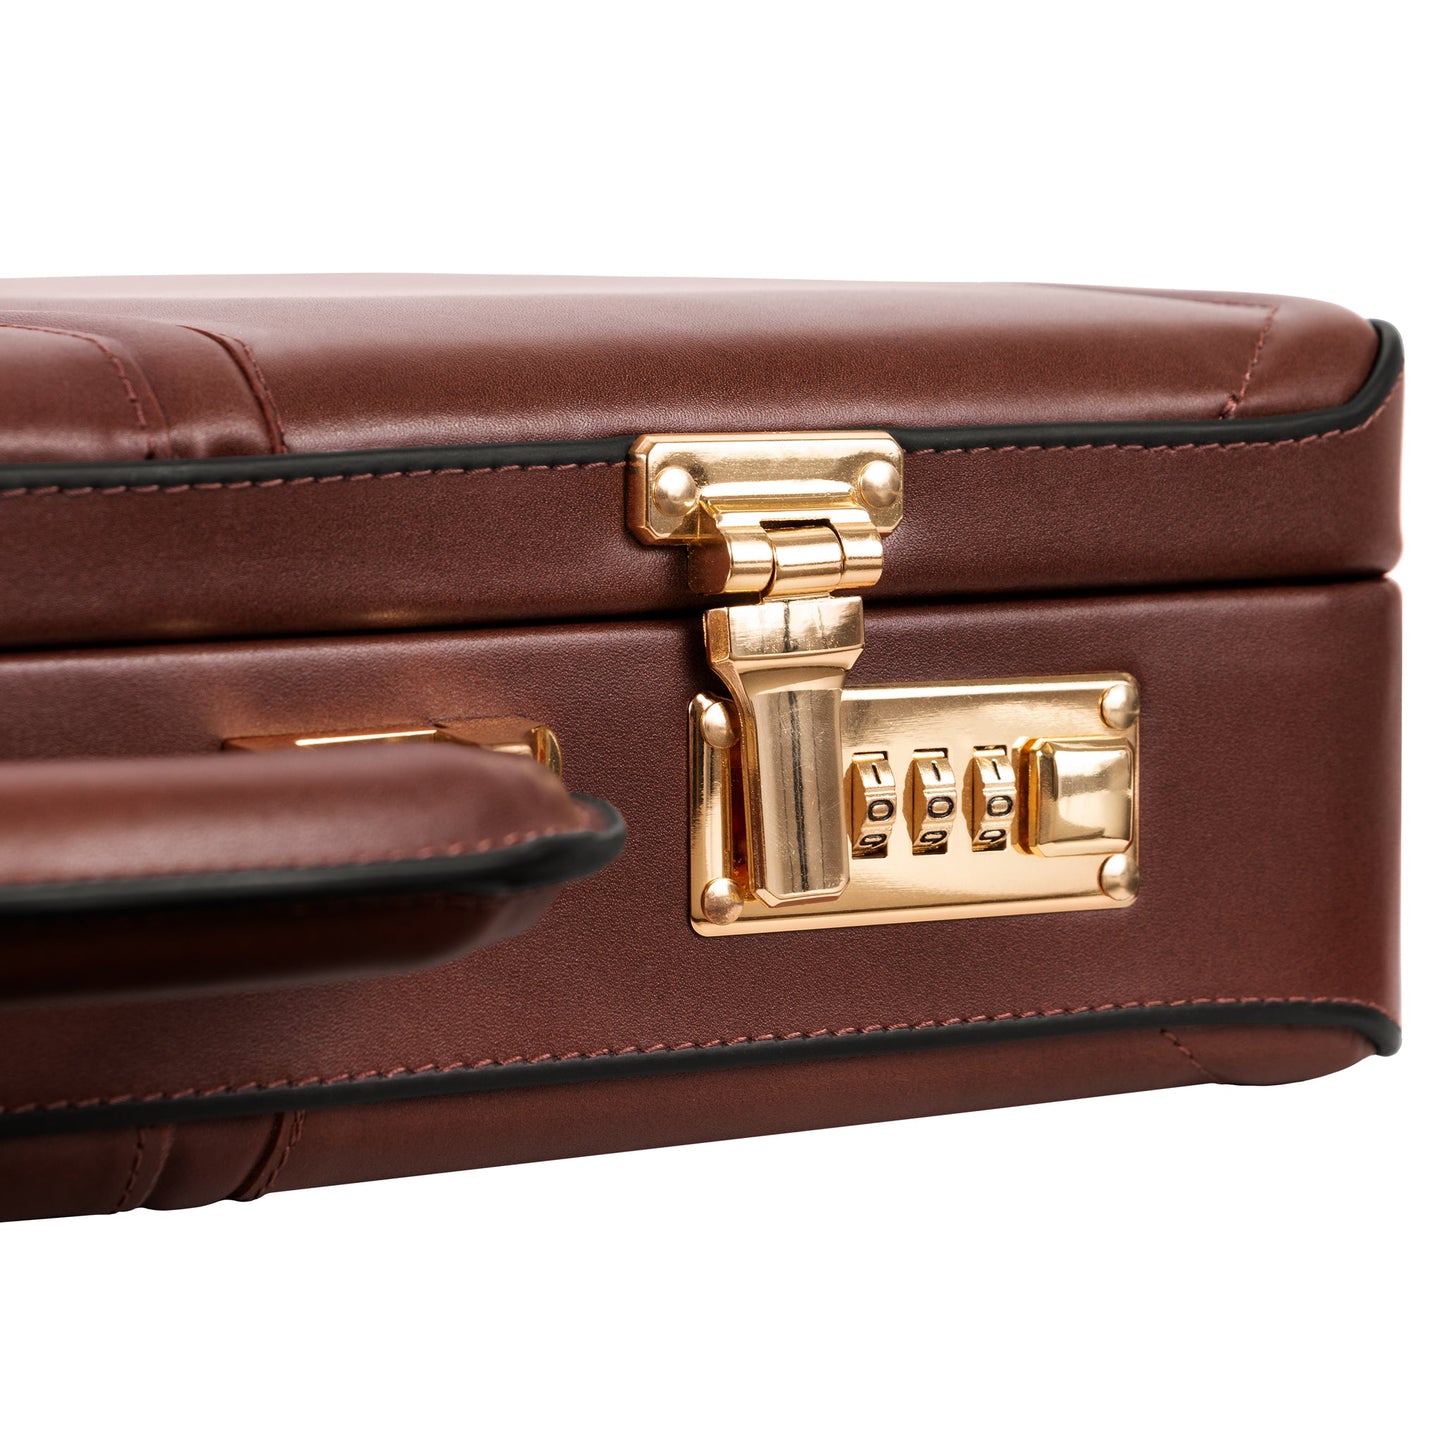 the daley leather attache case